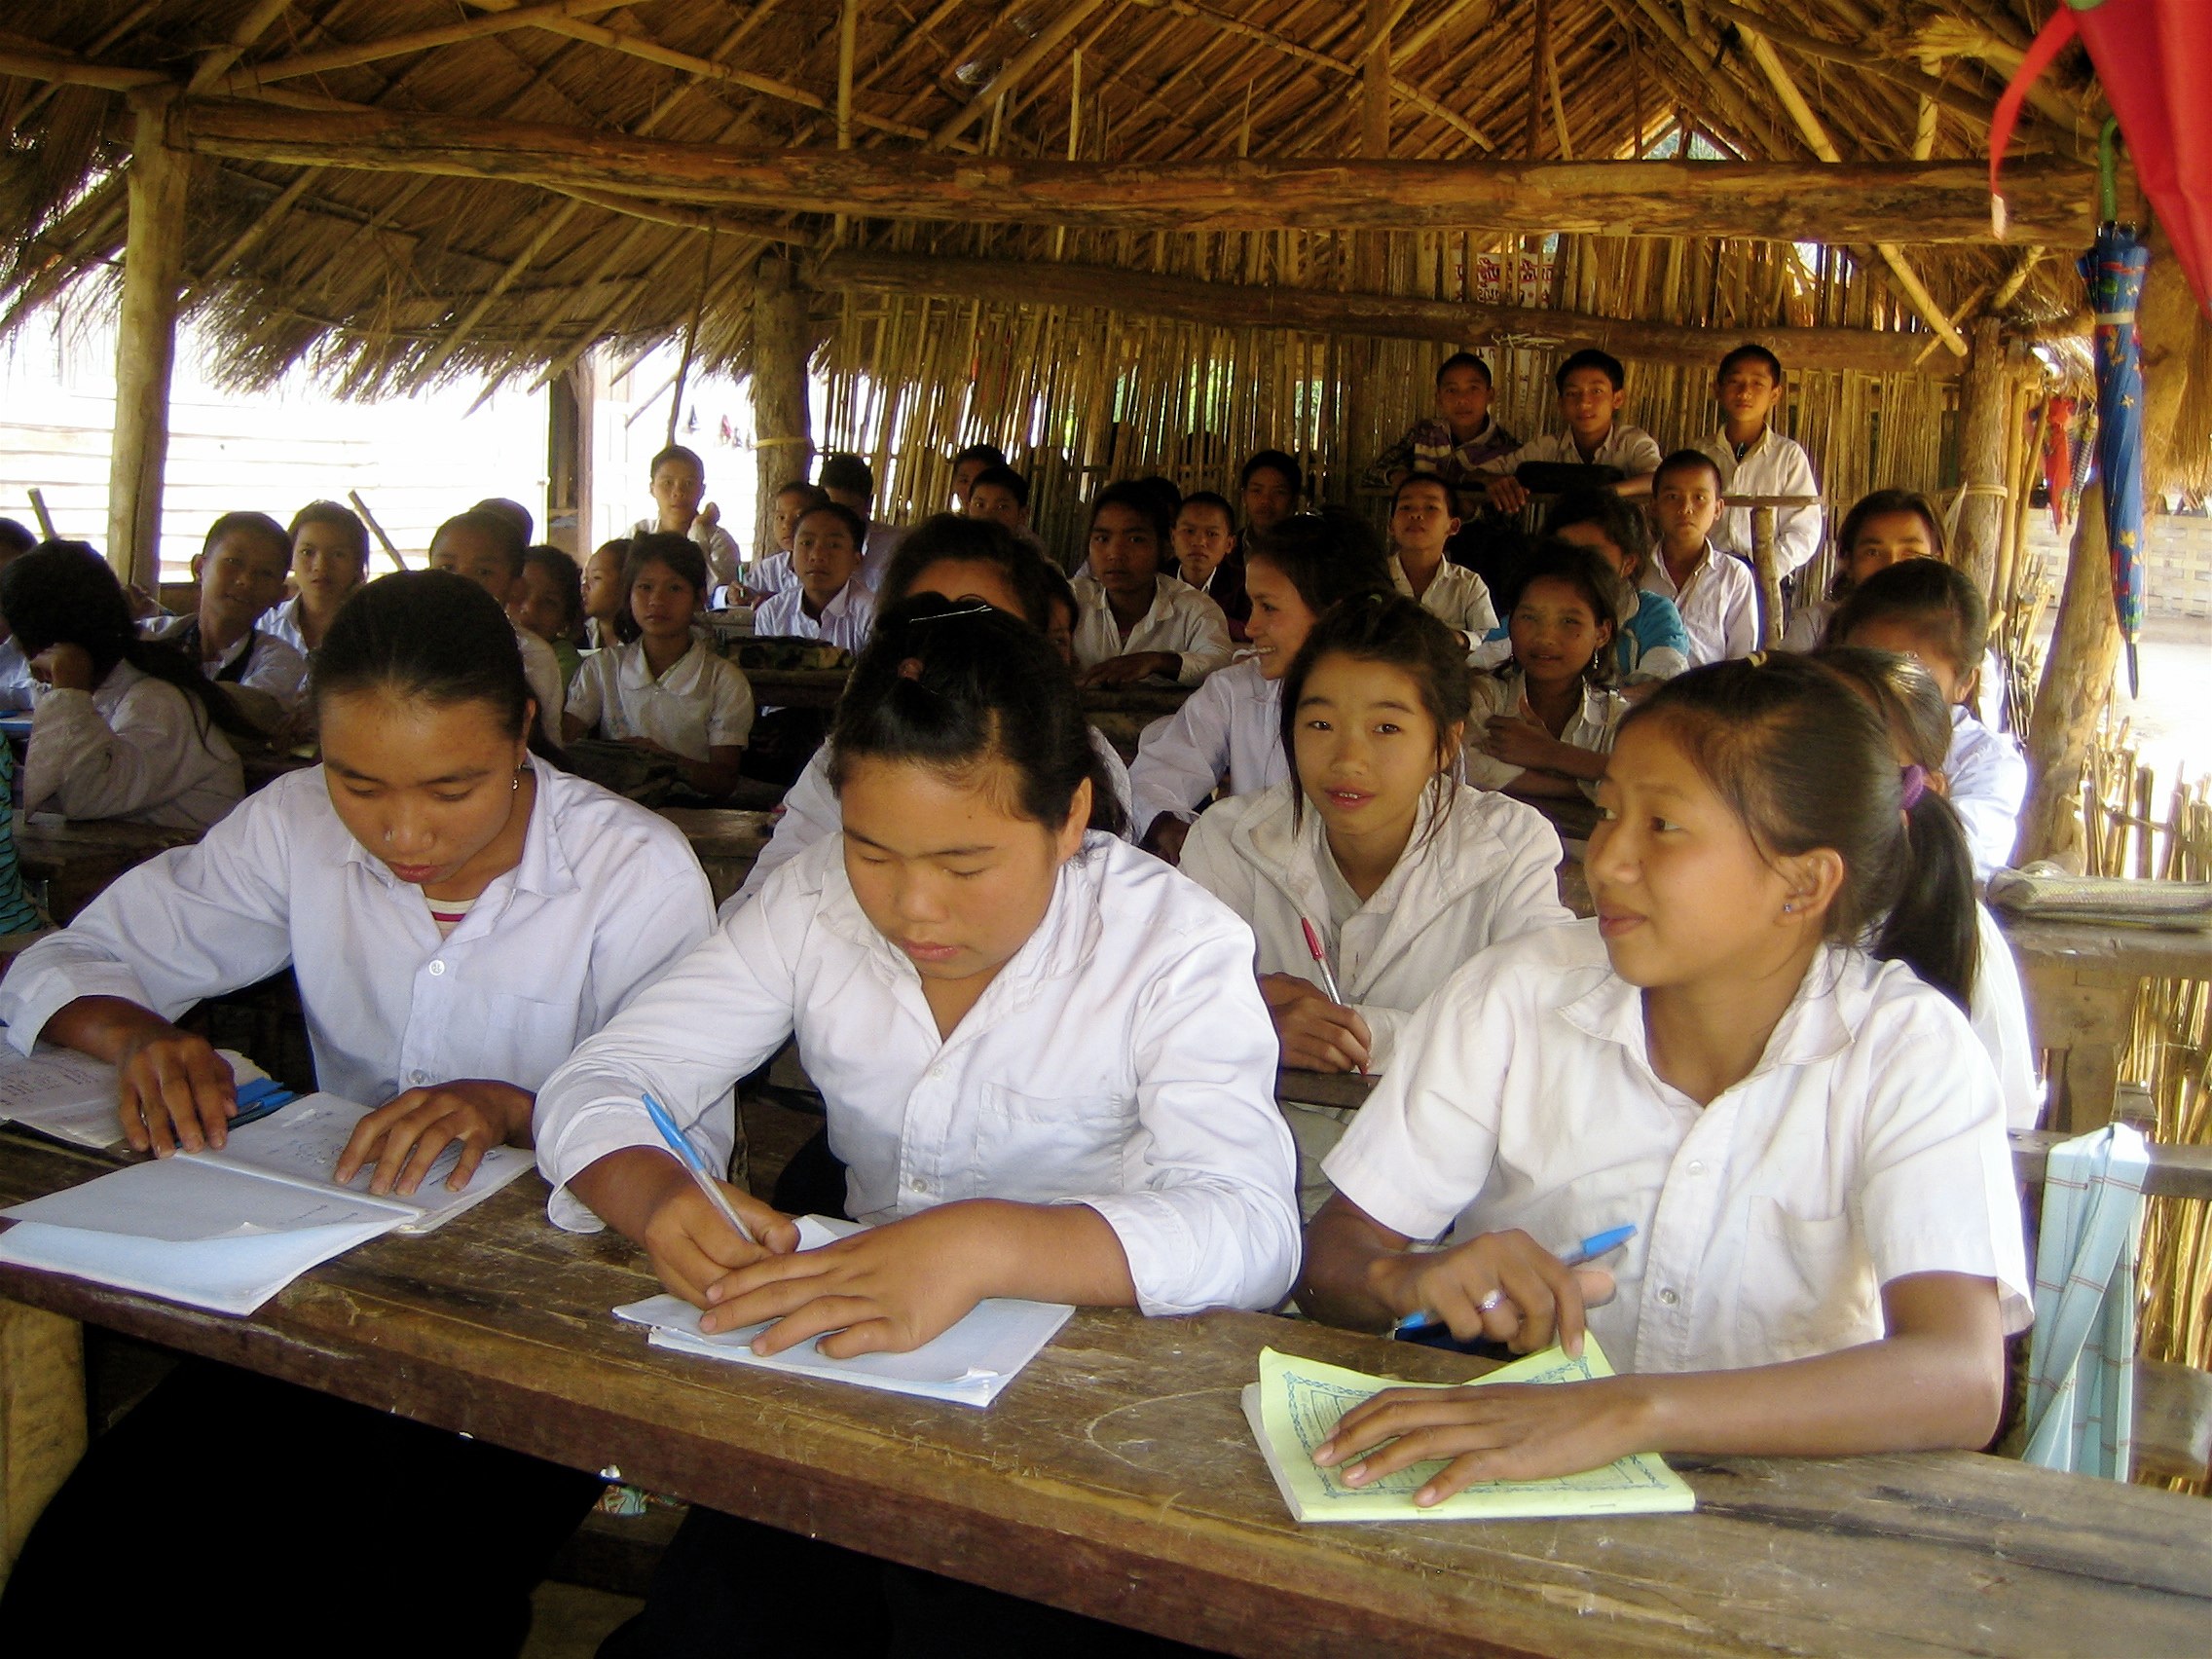 ea-laos-education-girls-writing-at-school1.jpg